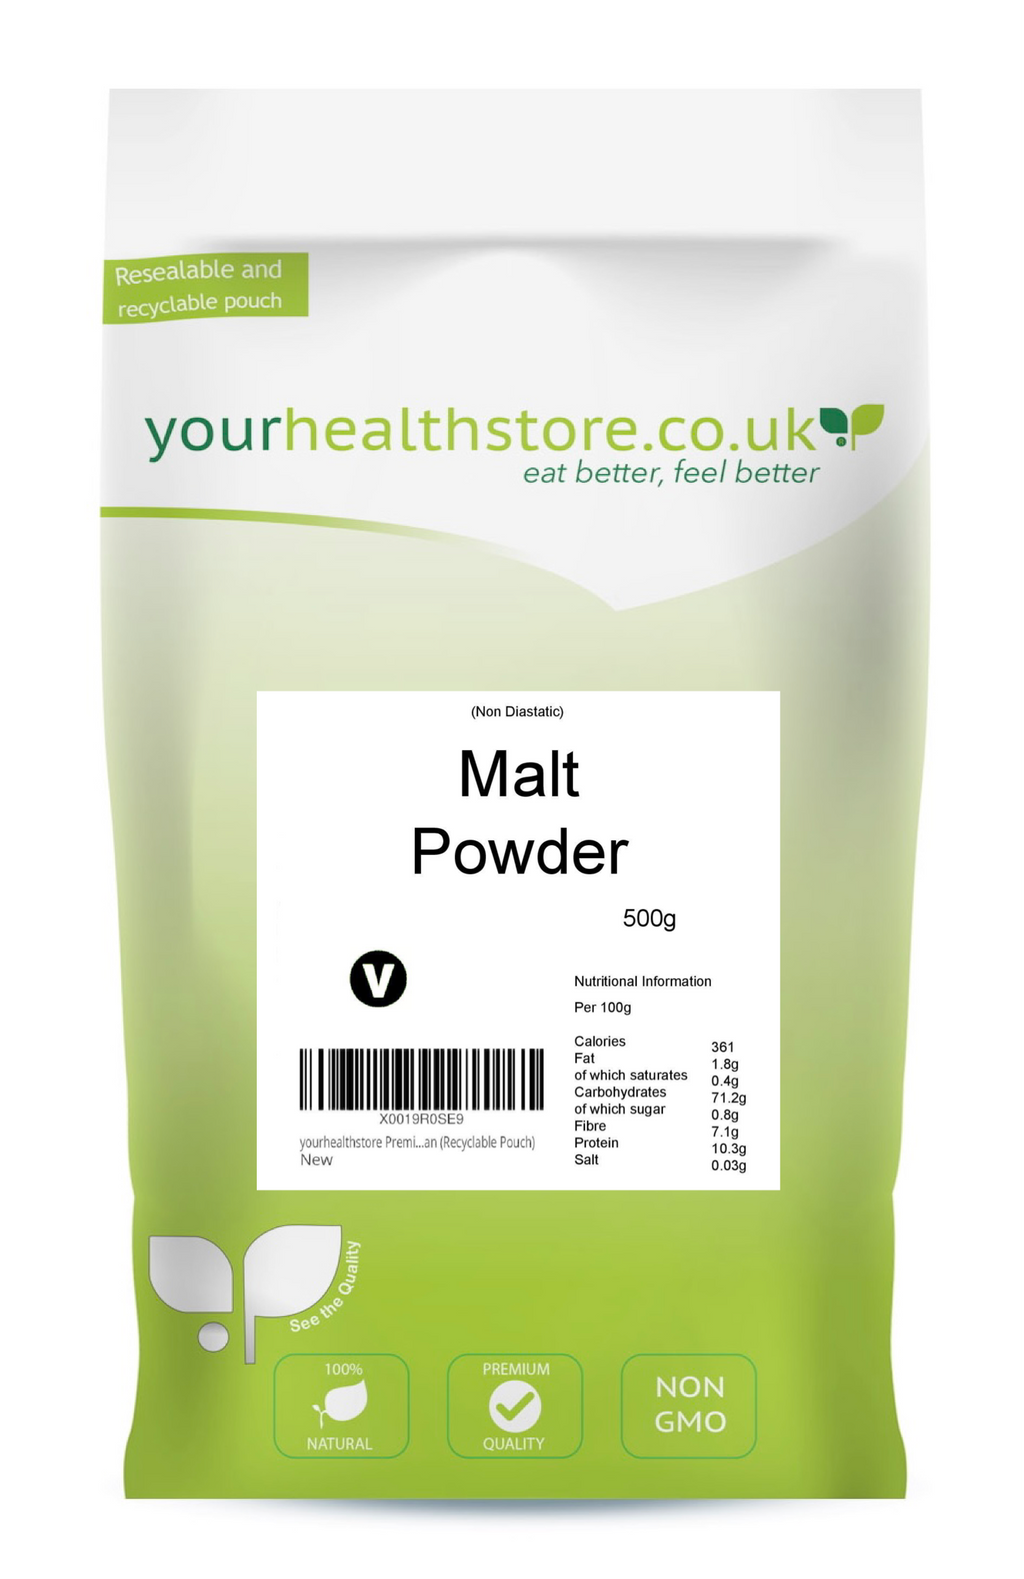 yourhealthstore Premium Malt Powder (non diastatic) 500g, Malt Flour to add Flavour and Sweetness to Baking